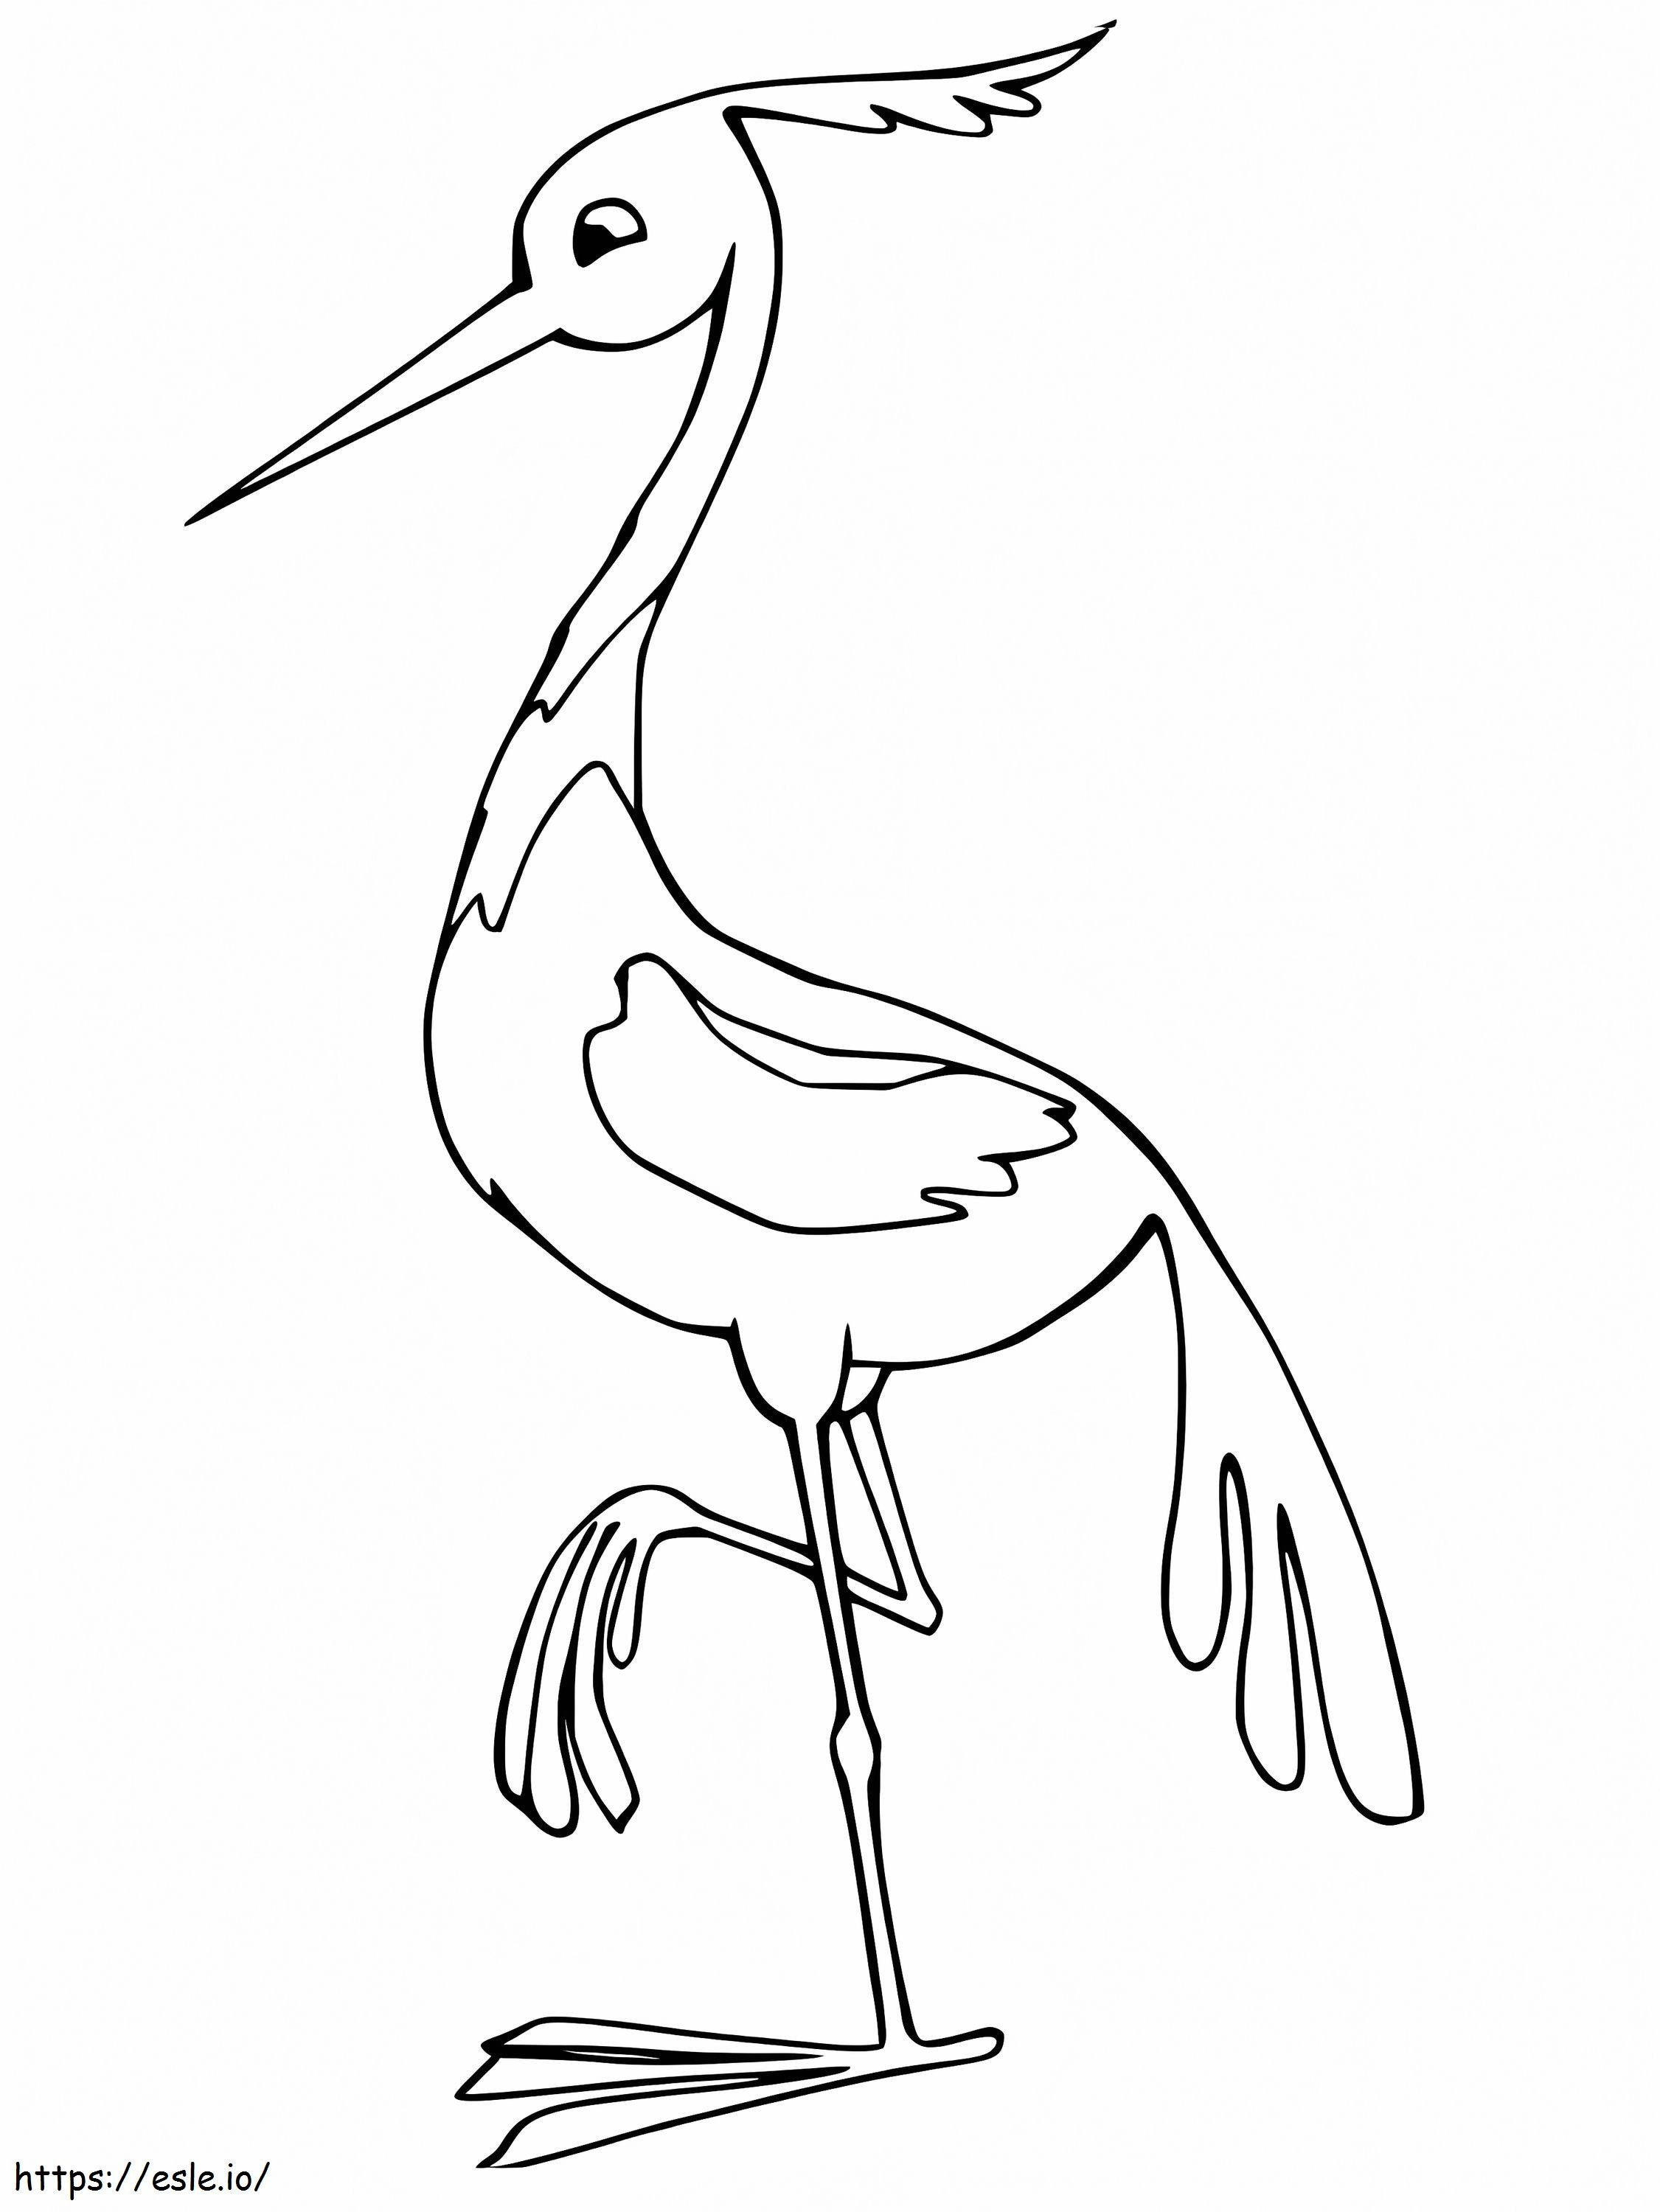 Wonderful Stork coloring page